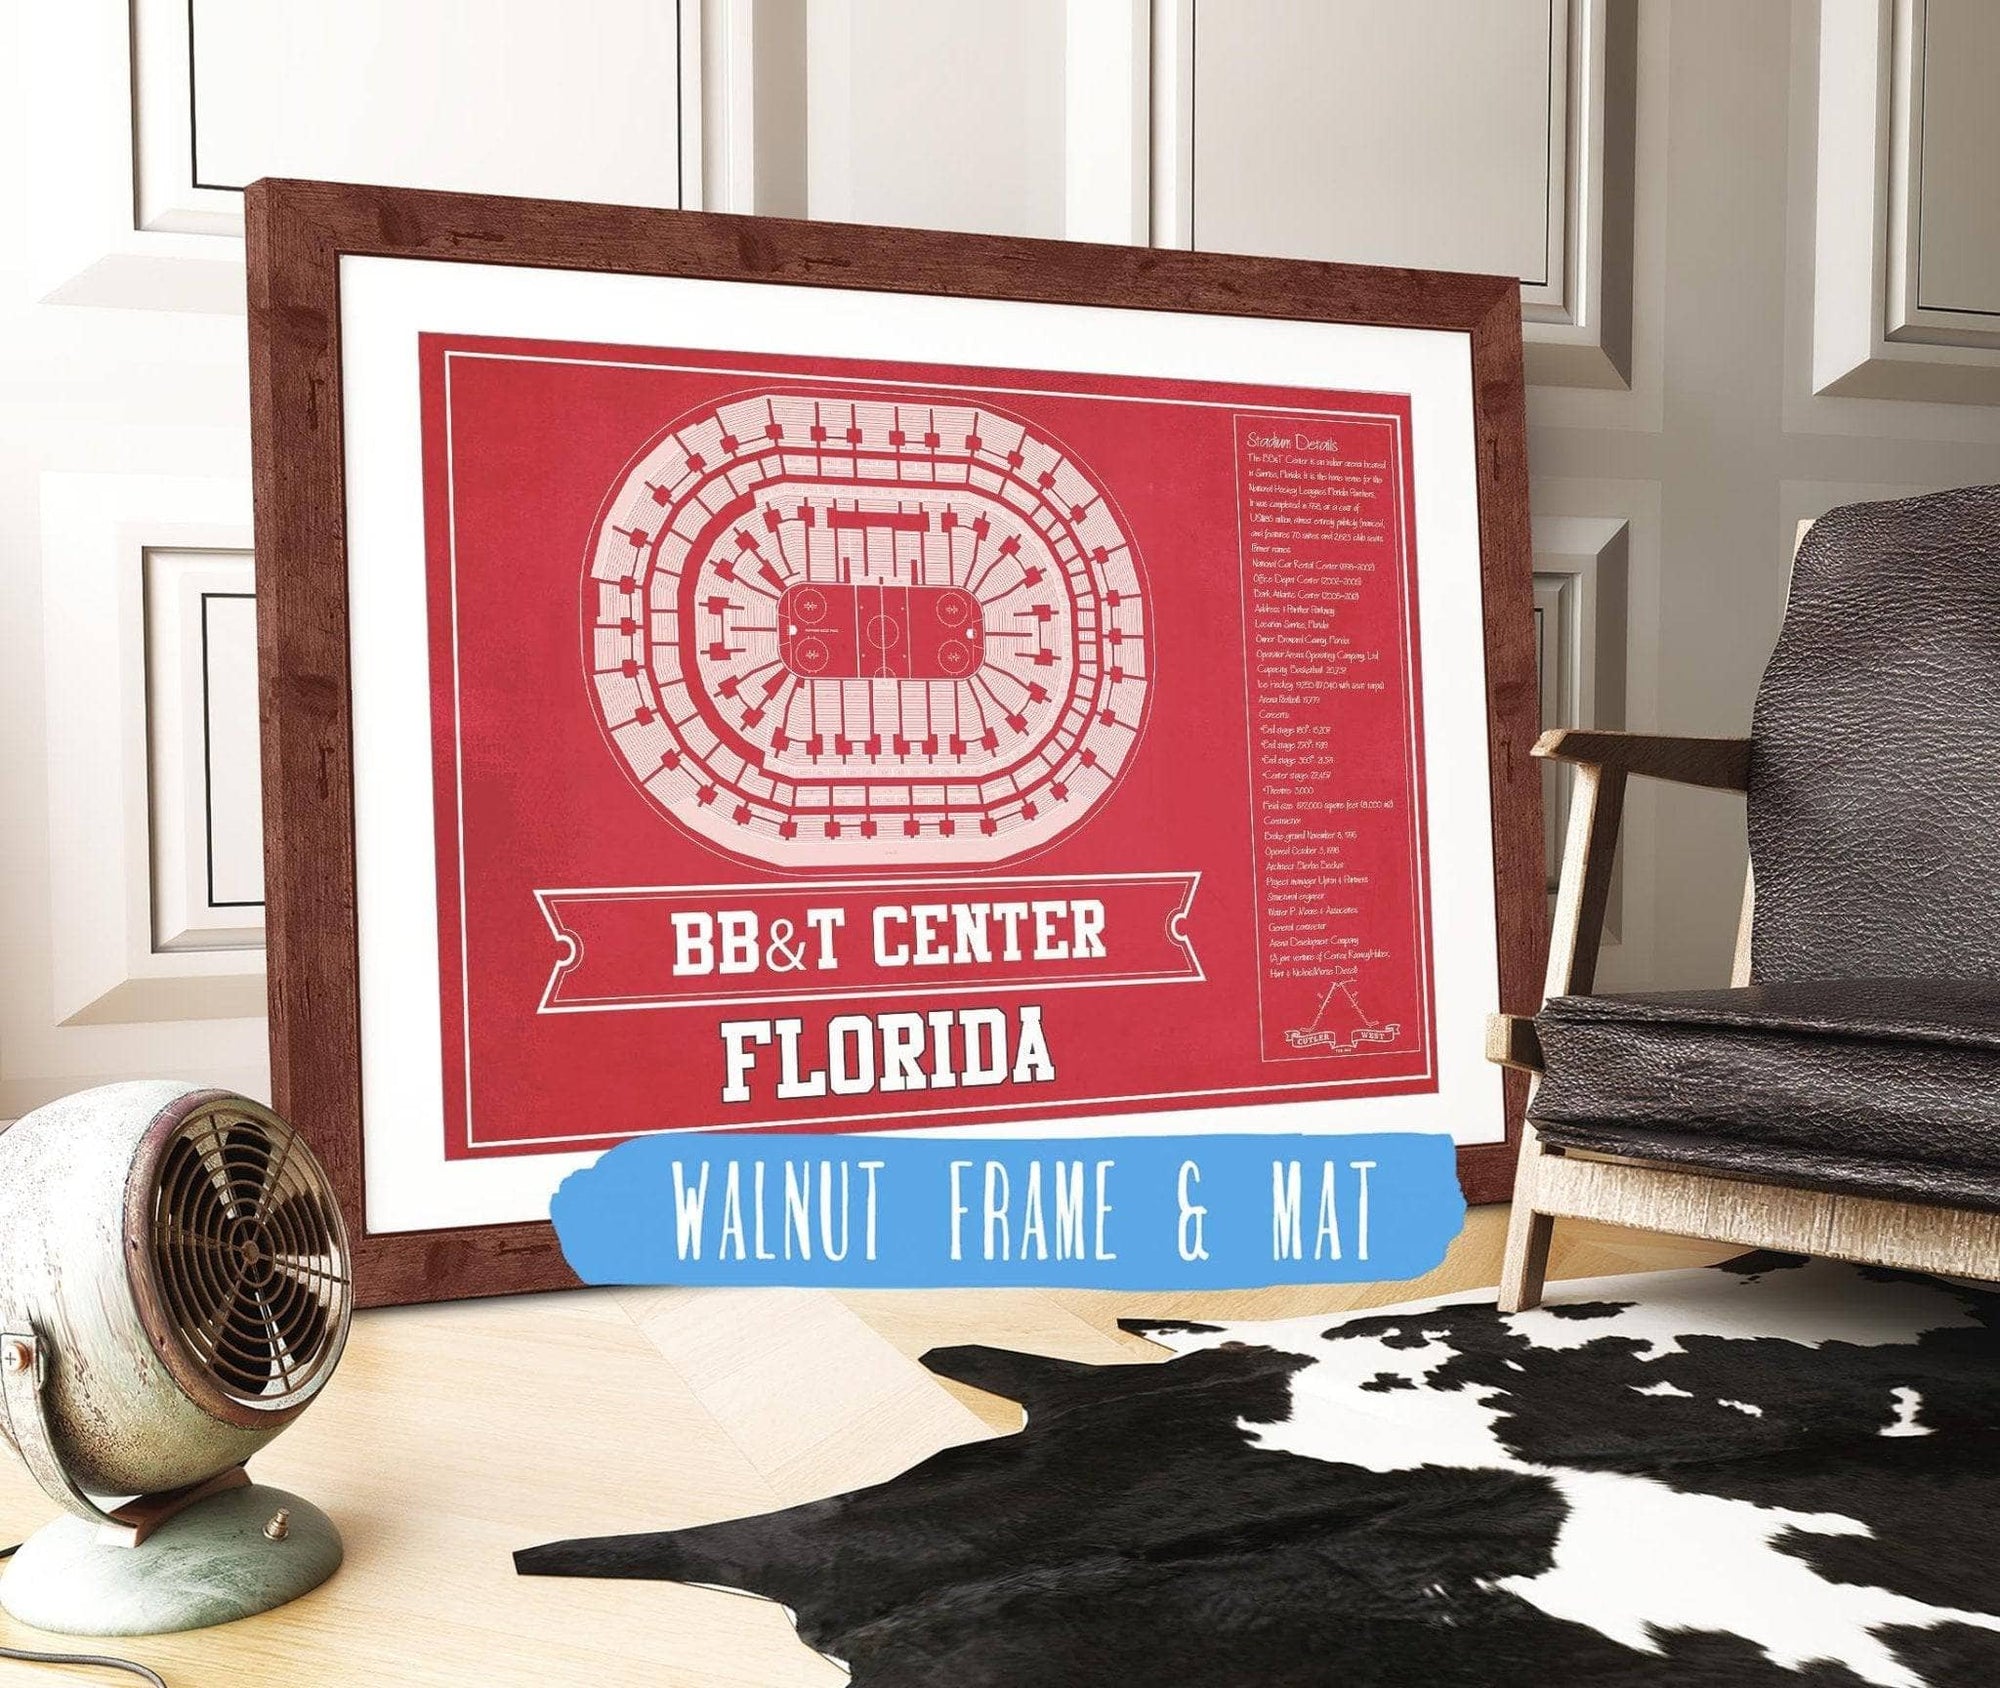 Cutler West 14" x 11" / Walnut Frame & Mat Florida Panthers BB&T Center Seating Chart - Vintage Hockey Team Color Print 659981334-TEAM